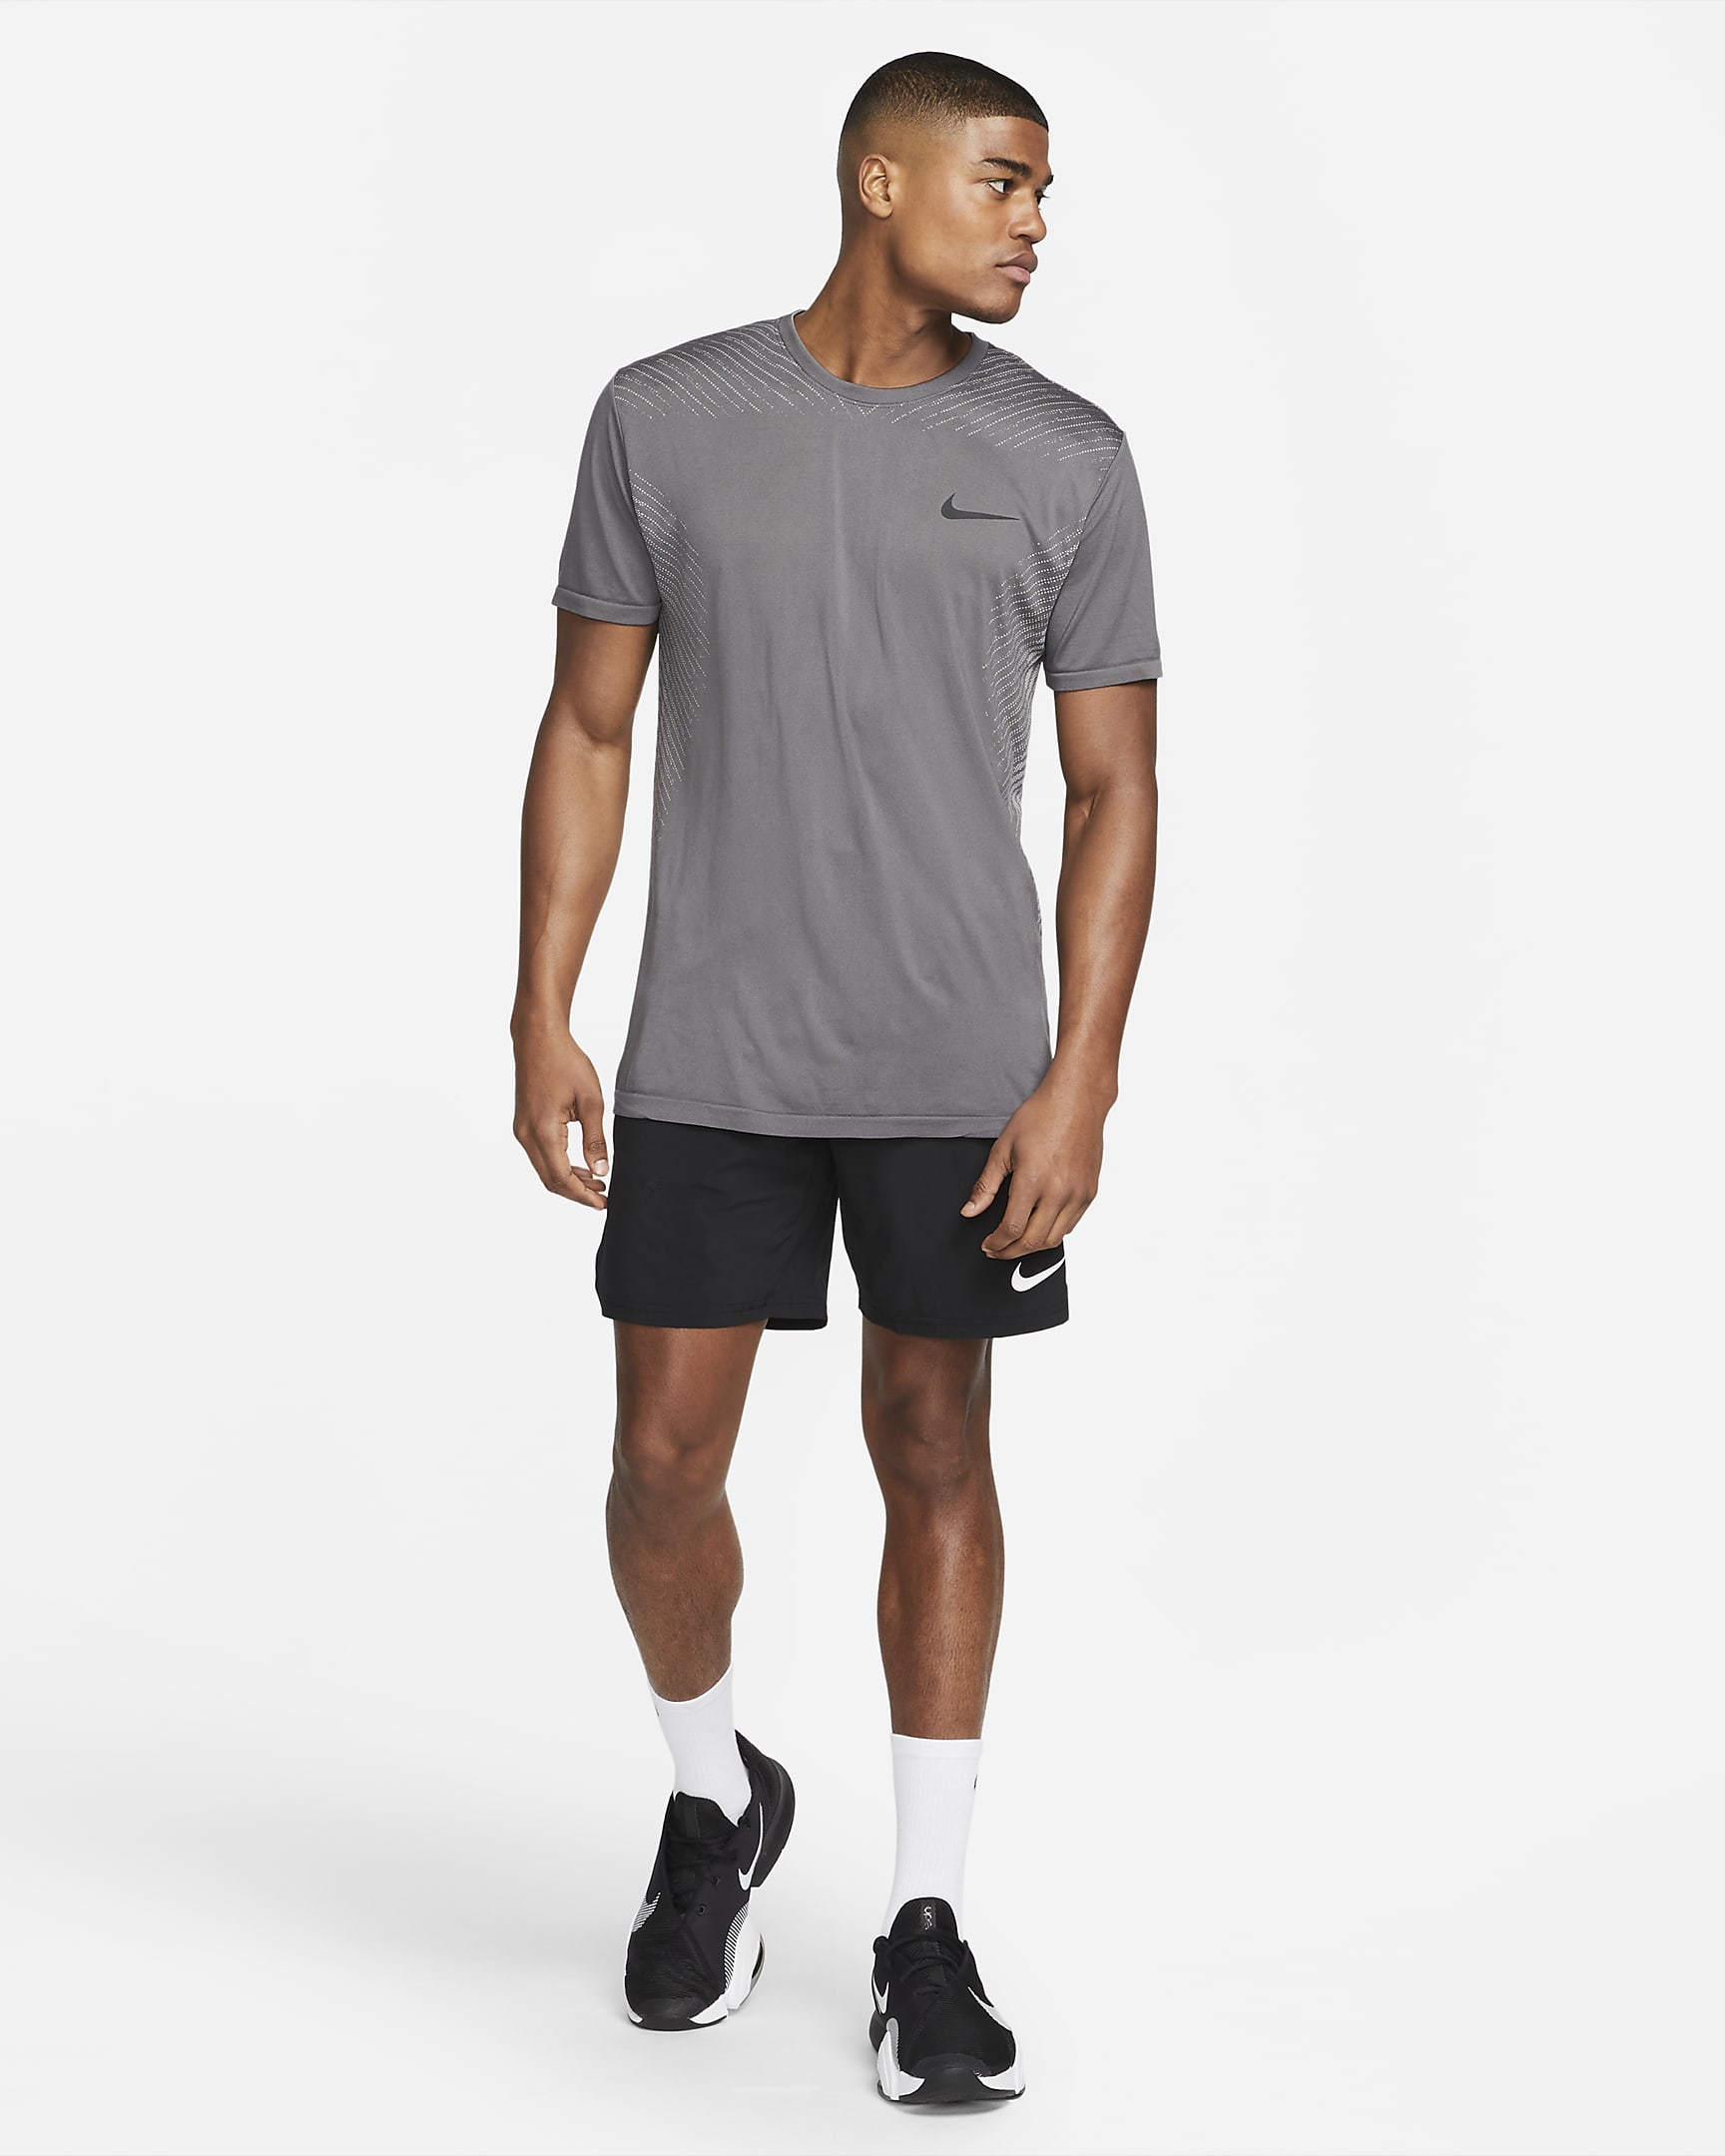 Nike Dri-FIT Men's Seamless Training Top. Nike.com